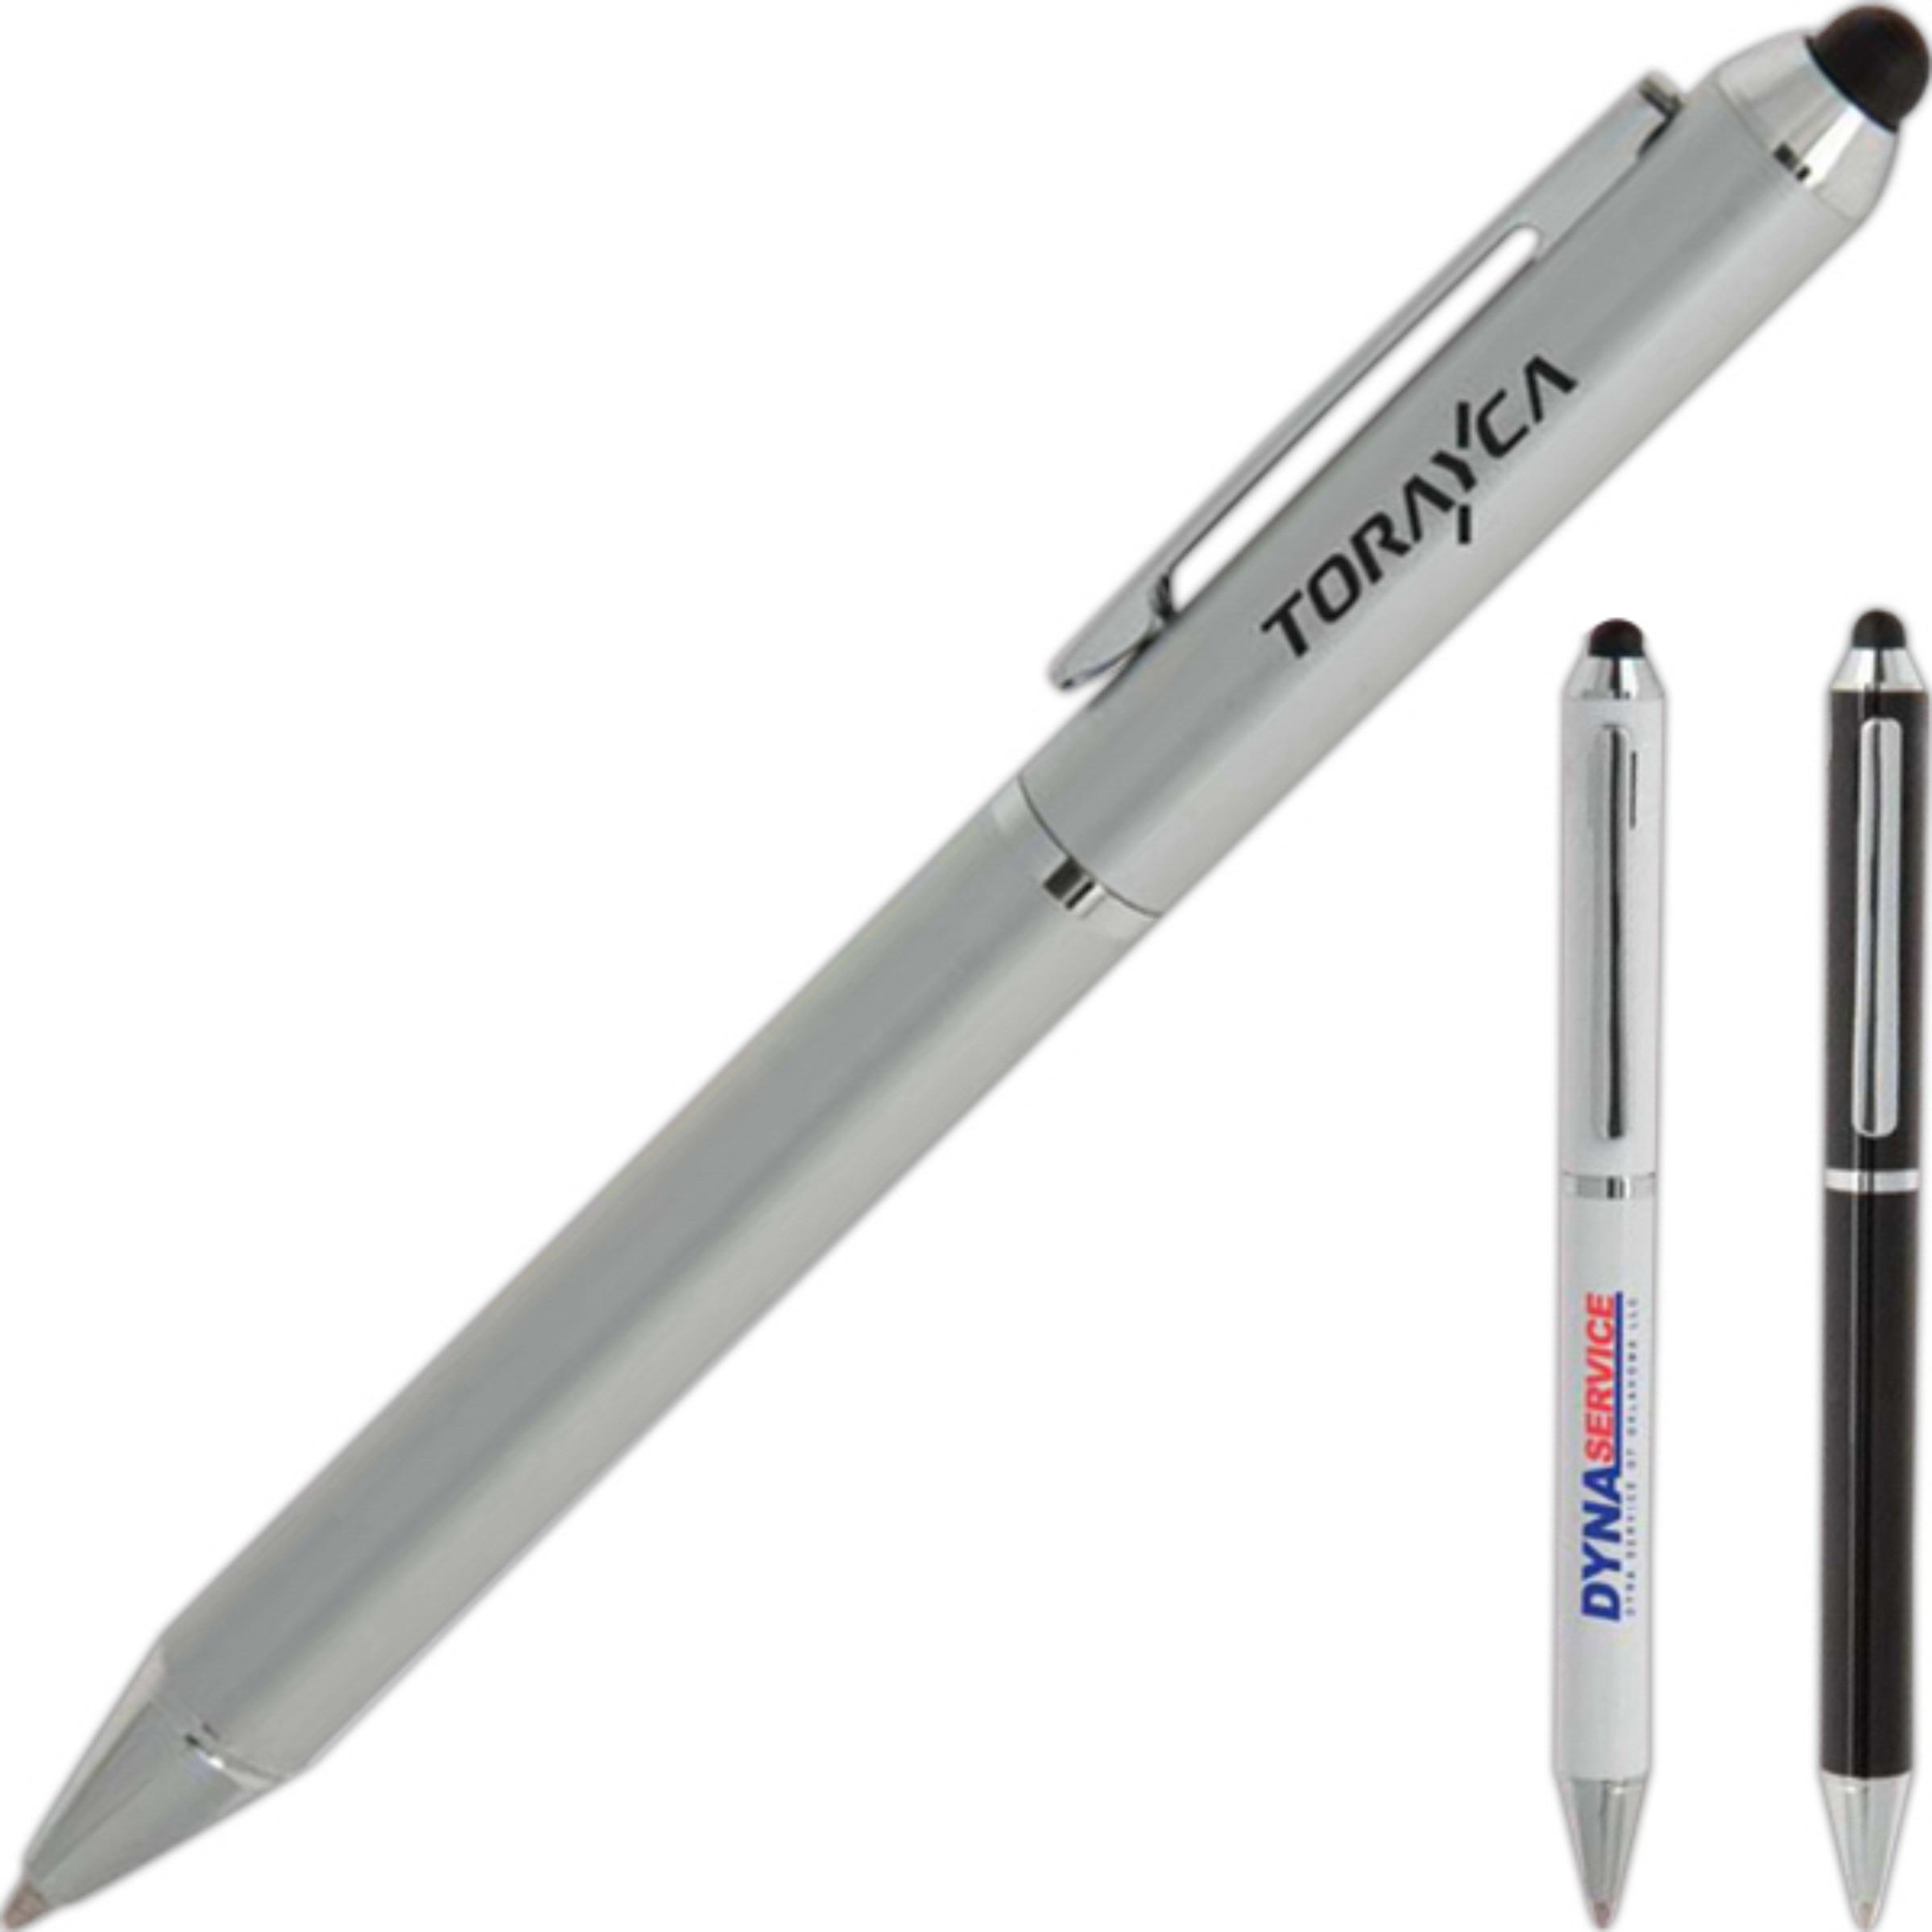 Stylus pen, Cosmo Fiber Promo products